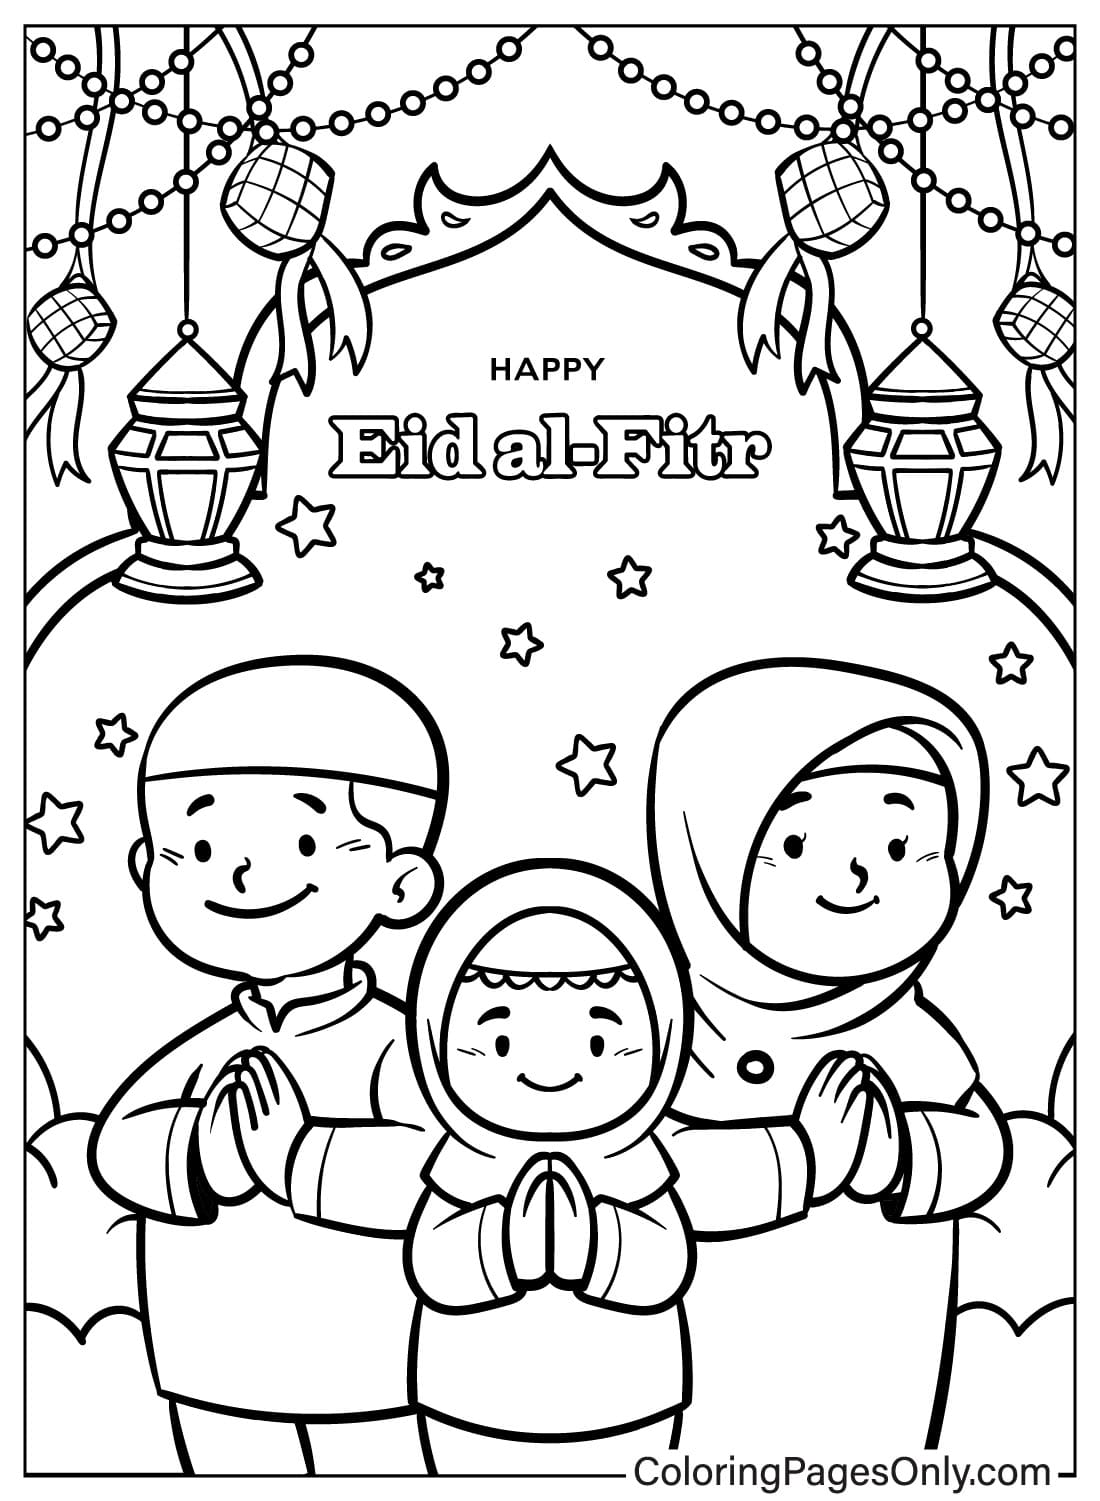 Eid Al-Fitr kleurplaat tekenen van Eid Al-Fitr